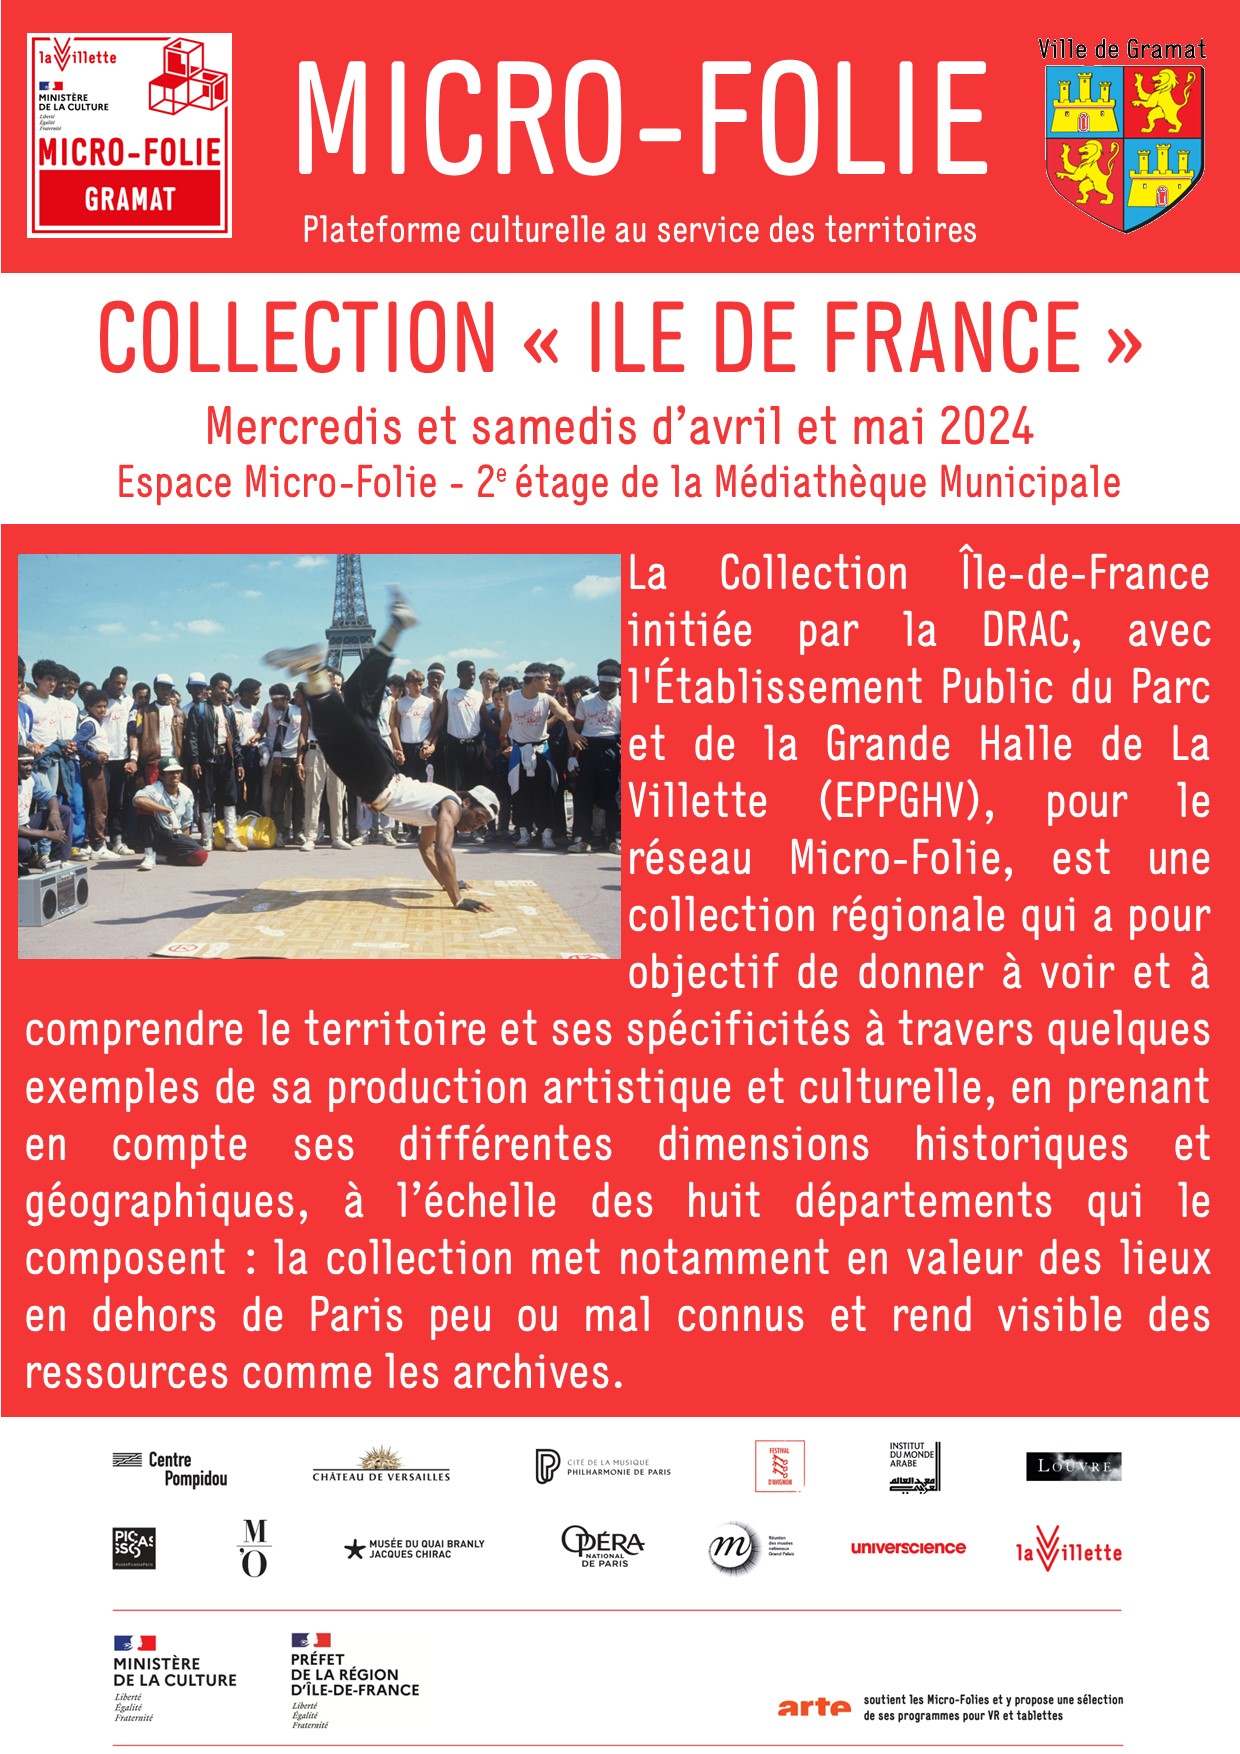 collection_ile_de_france.jpg